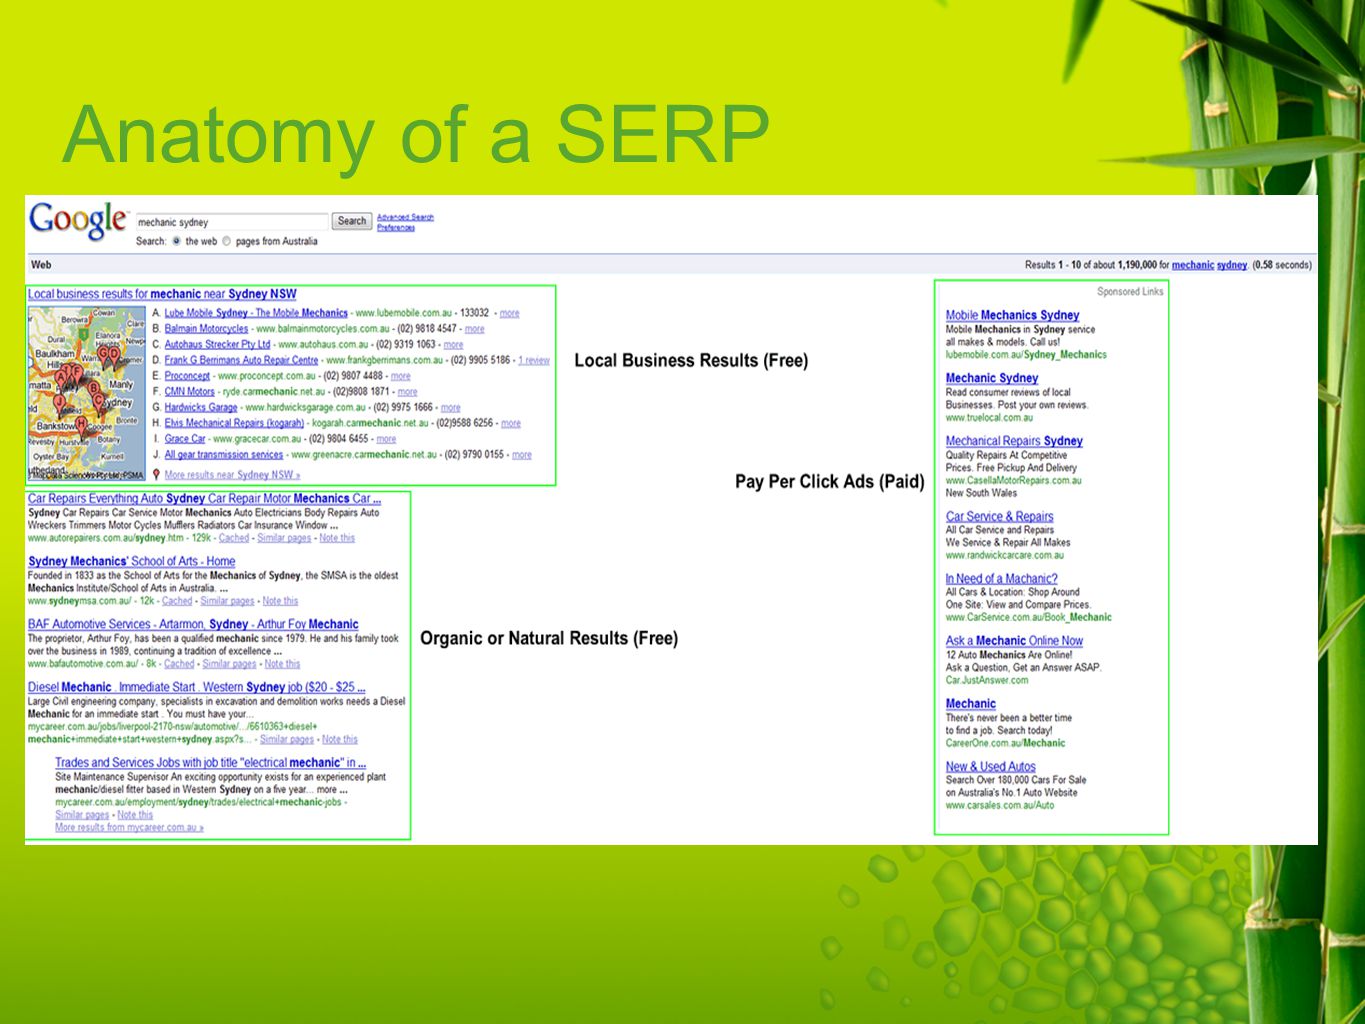 Anatomy of a SERP